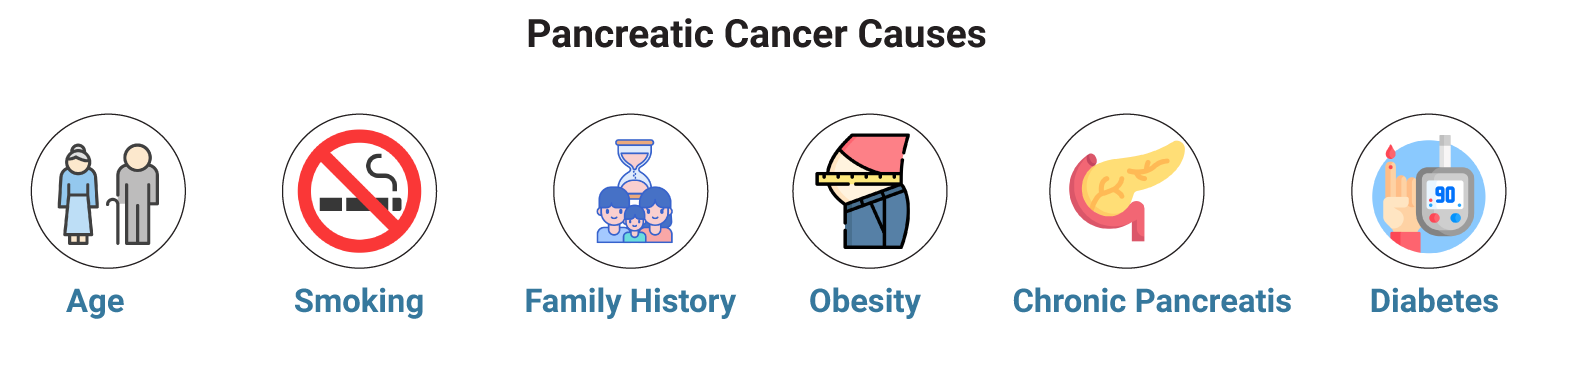 Pancreatic Cancer Causes